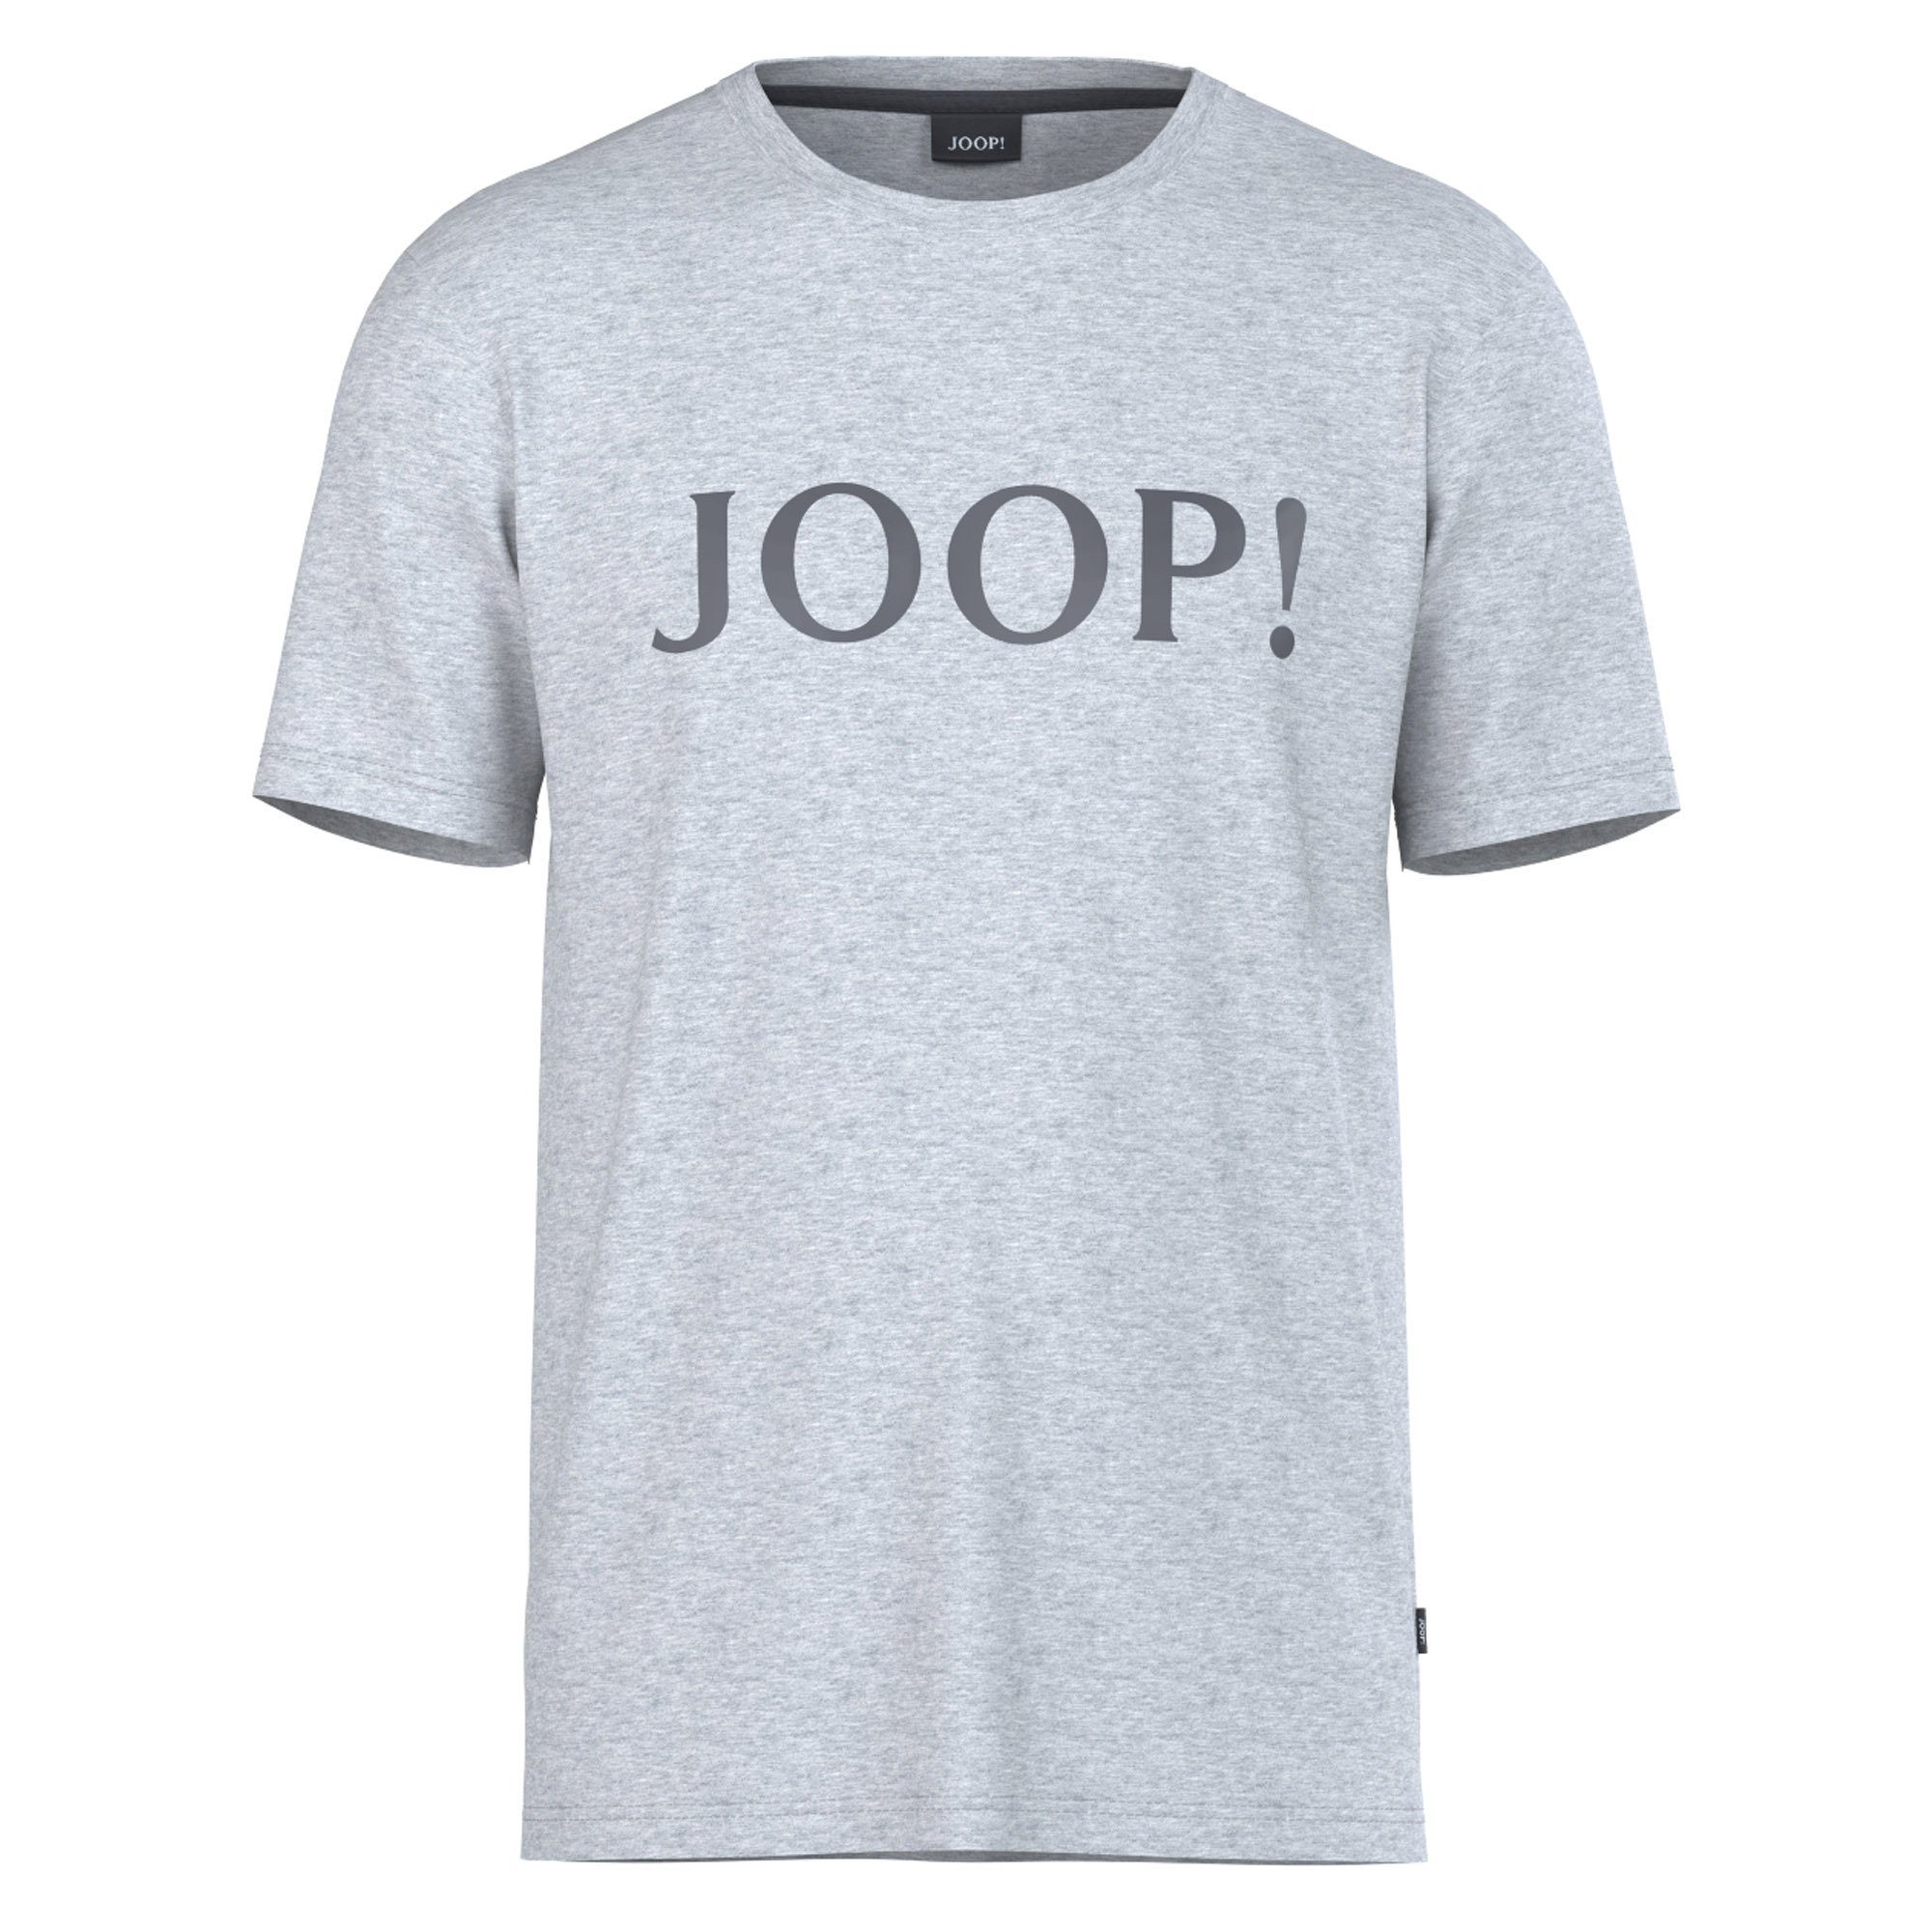 Joop! T-Shirt Herren T-Shirt Grau JJ-01Alerio-2, - Rundhals, Halbarm